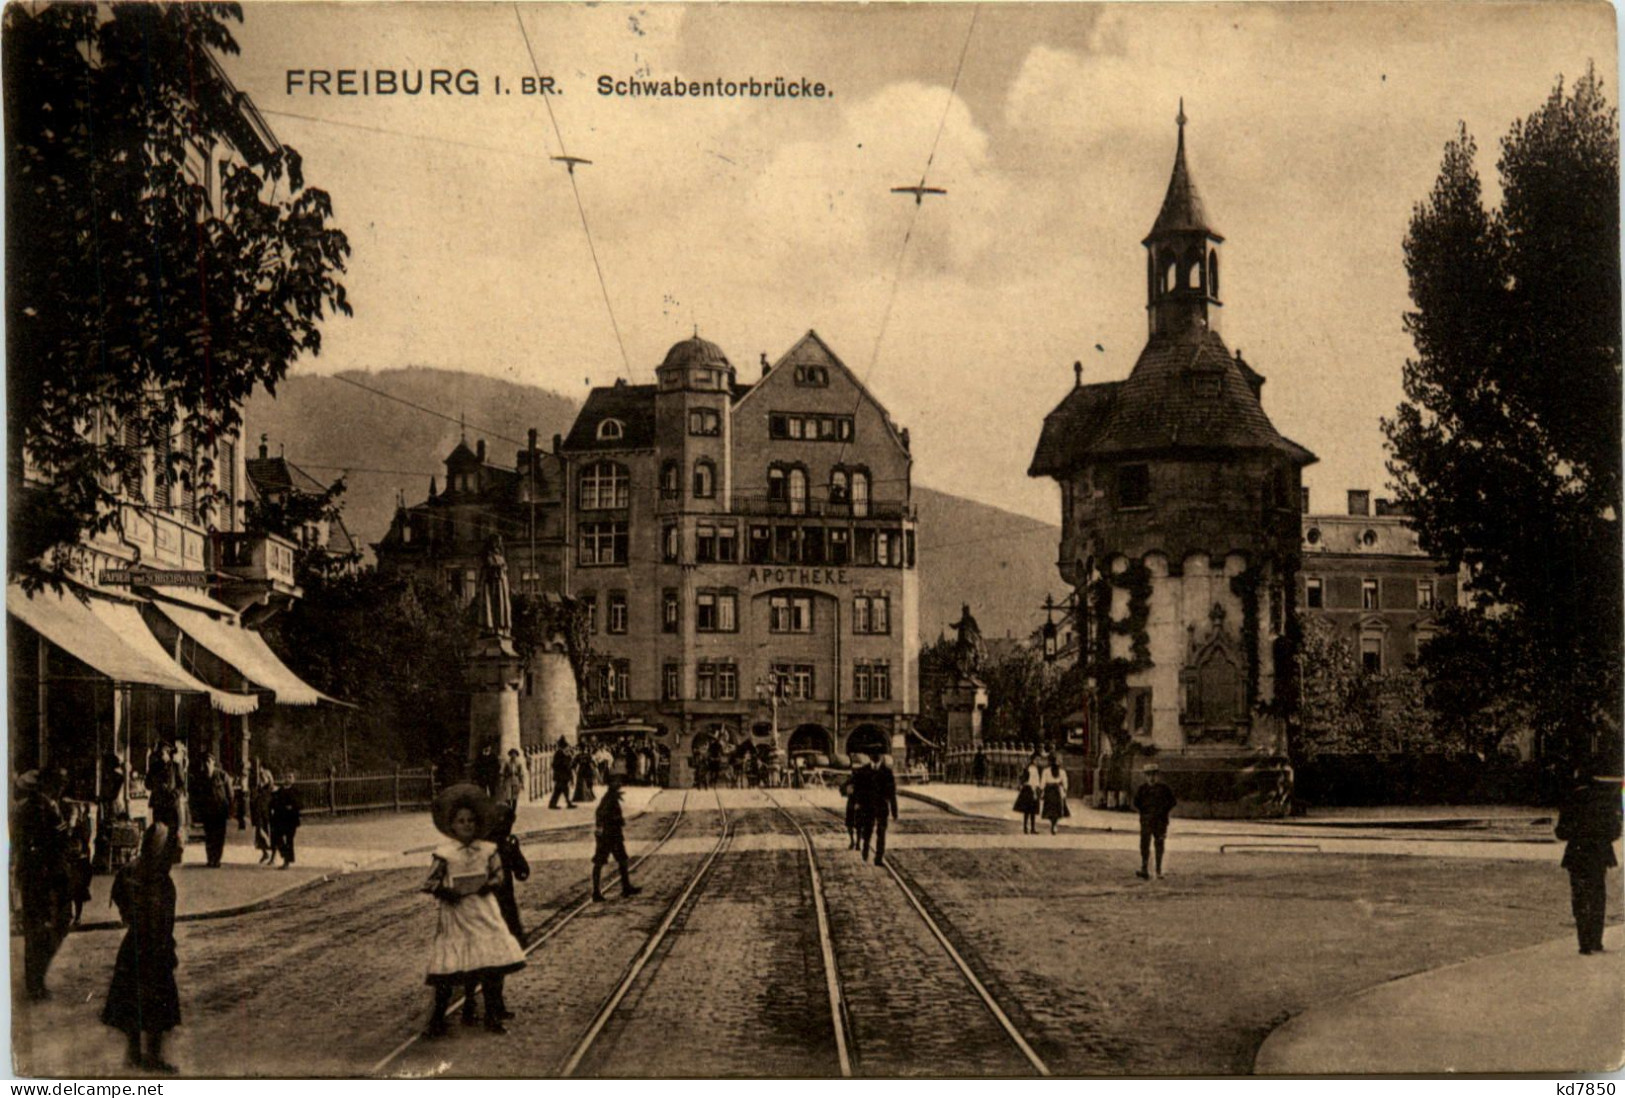 Freiburg I.Br., Schwabentorbrücke - Freiburg I. Br.